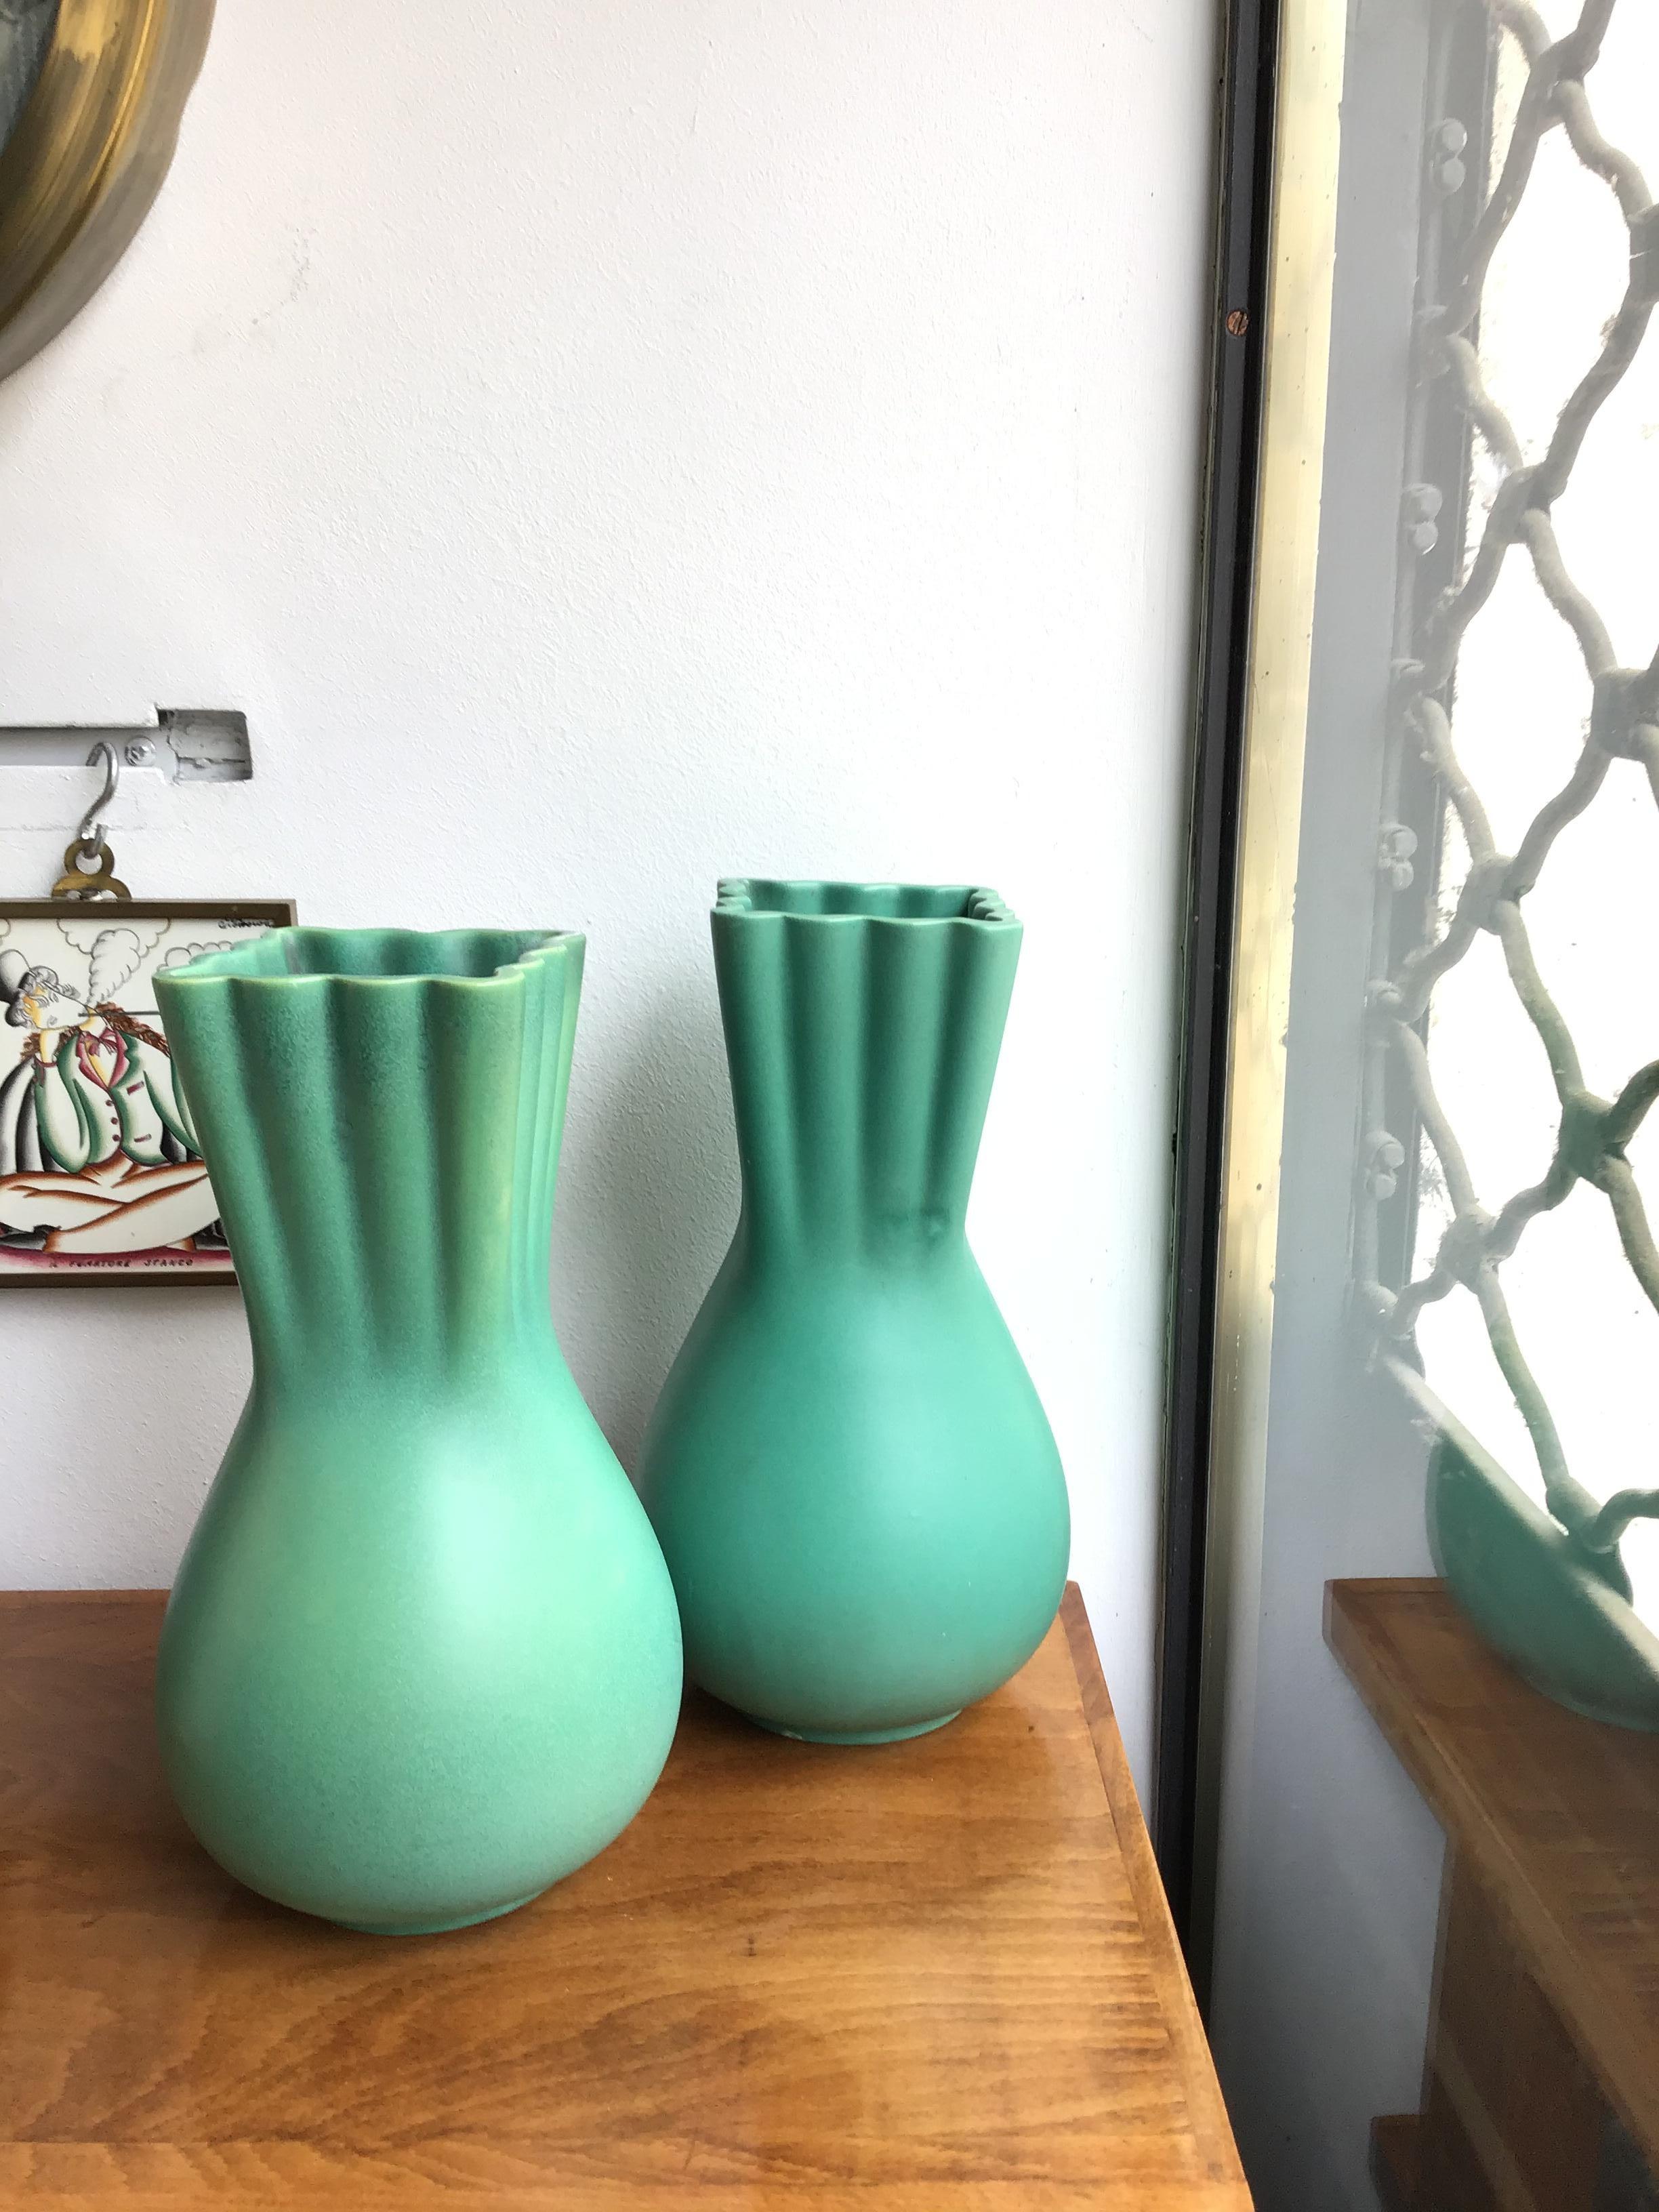 Richard Ginori Giovanni Gariboldi Green Vase Ceramic, 1950, Italy For Sale 1